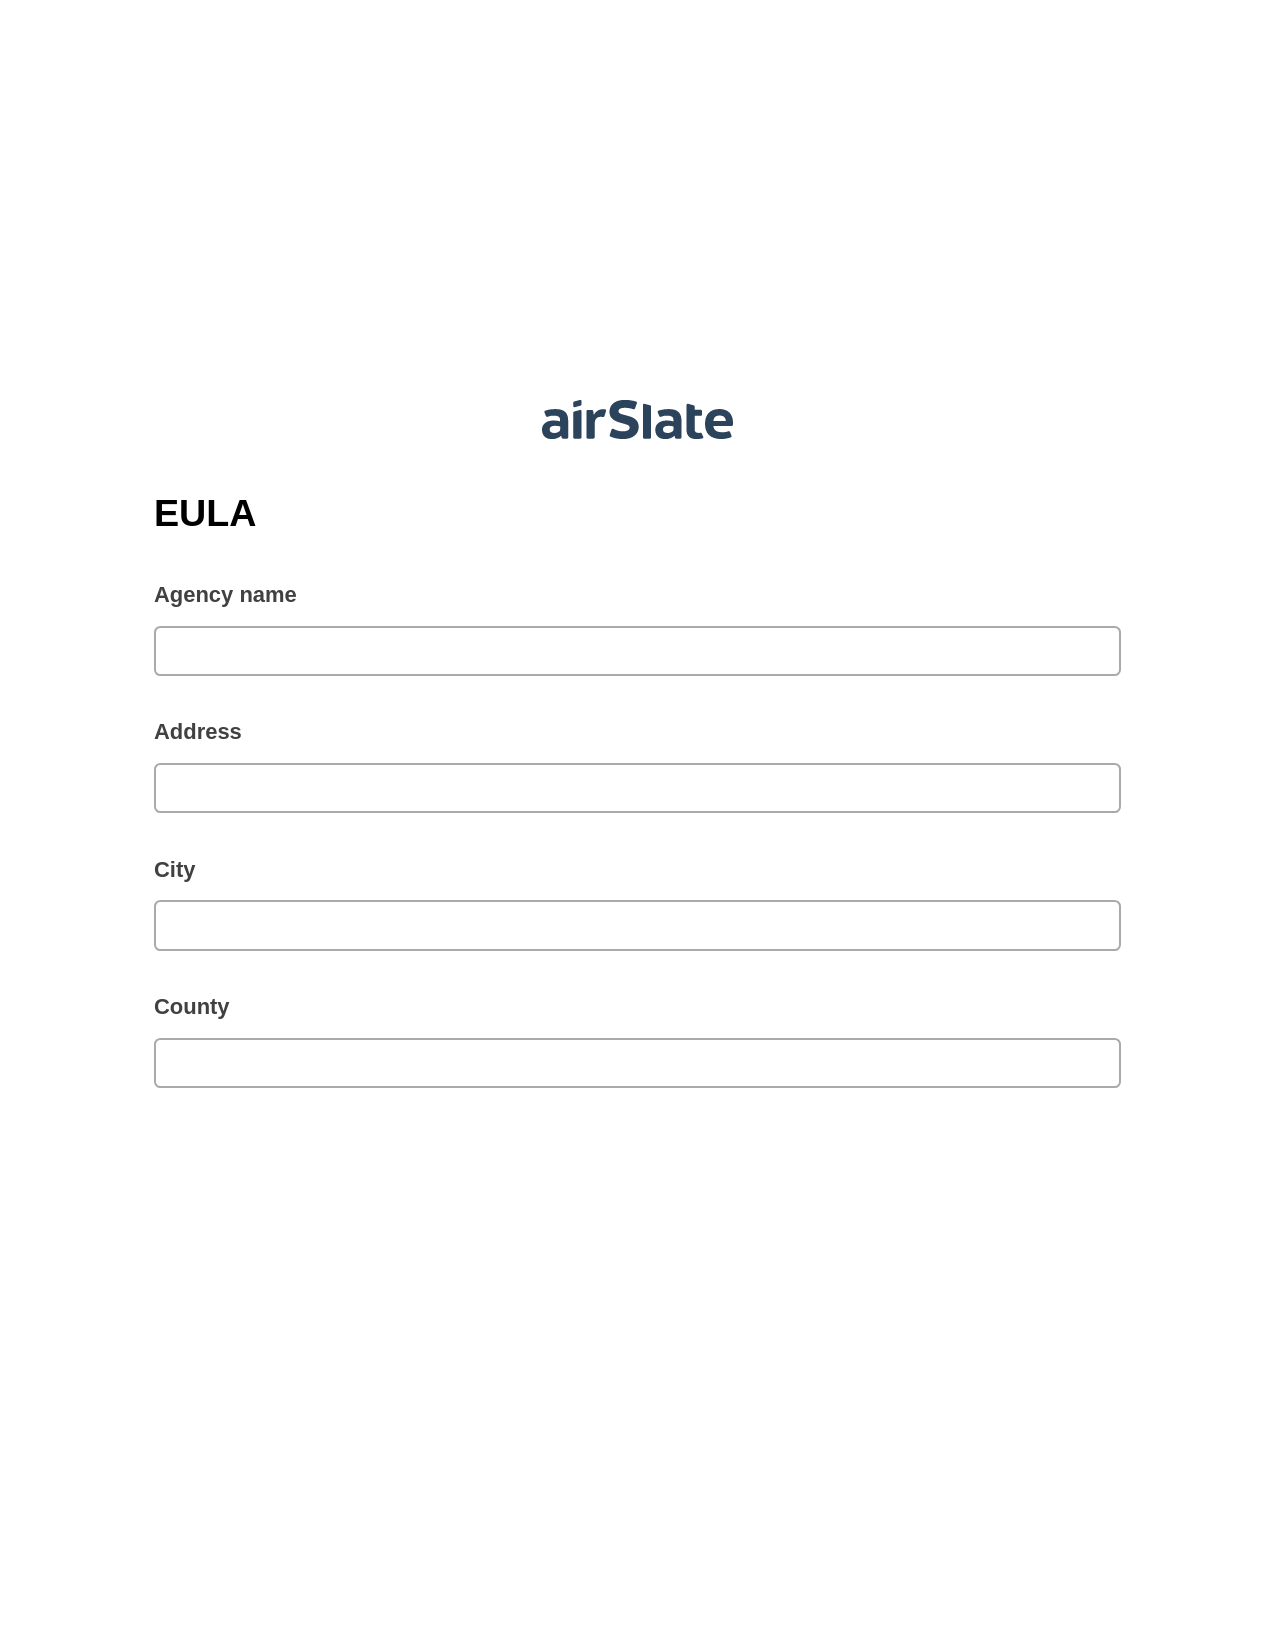 EULA Pre-fill from CSV File Bot, Reminder Bot, Slack Notification Postfinish Bot